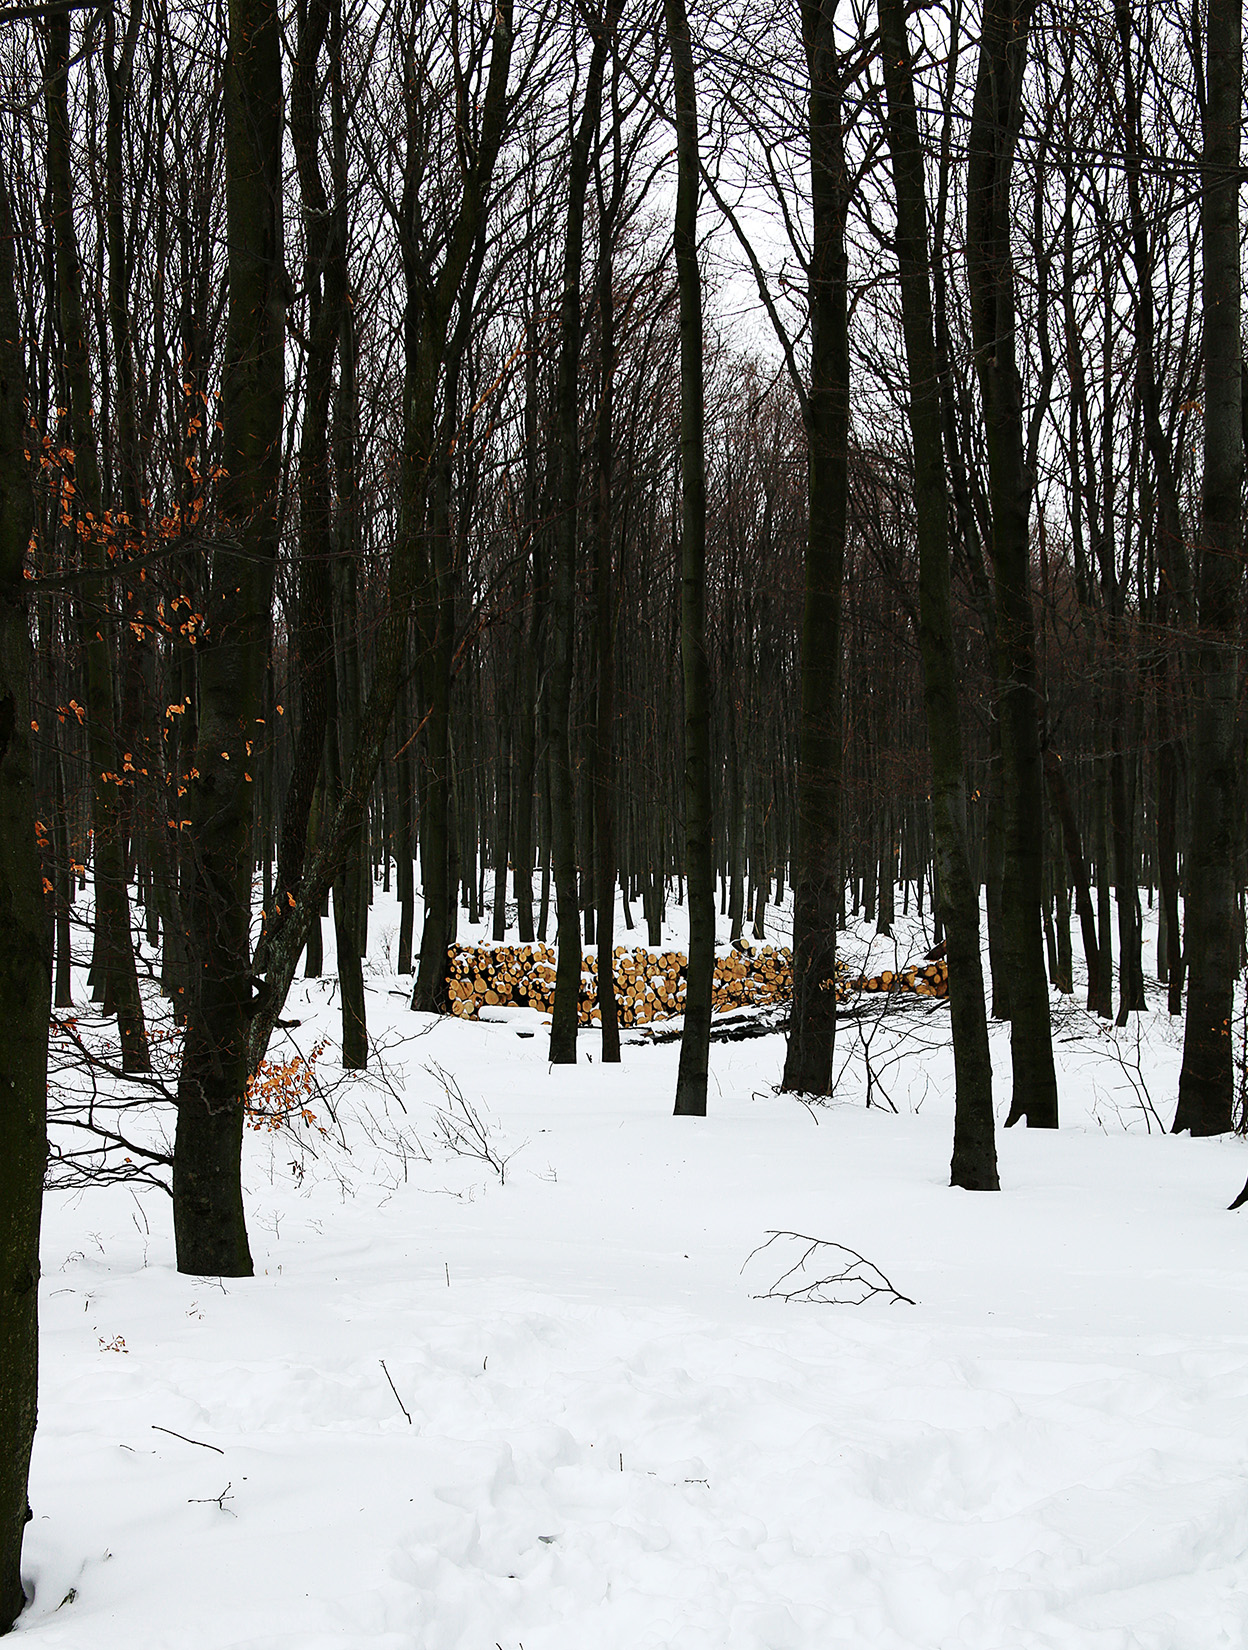 Walk deep into snowy winter forest